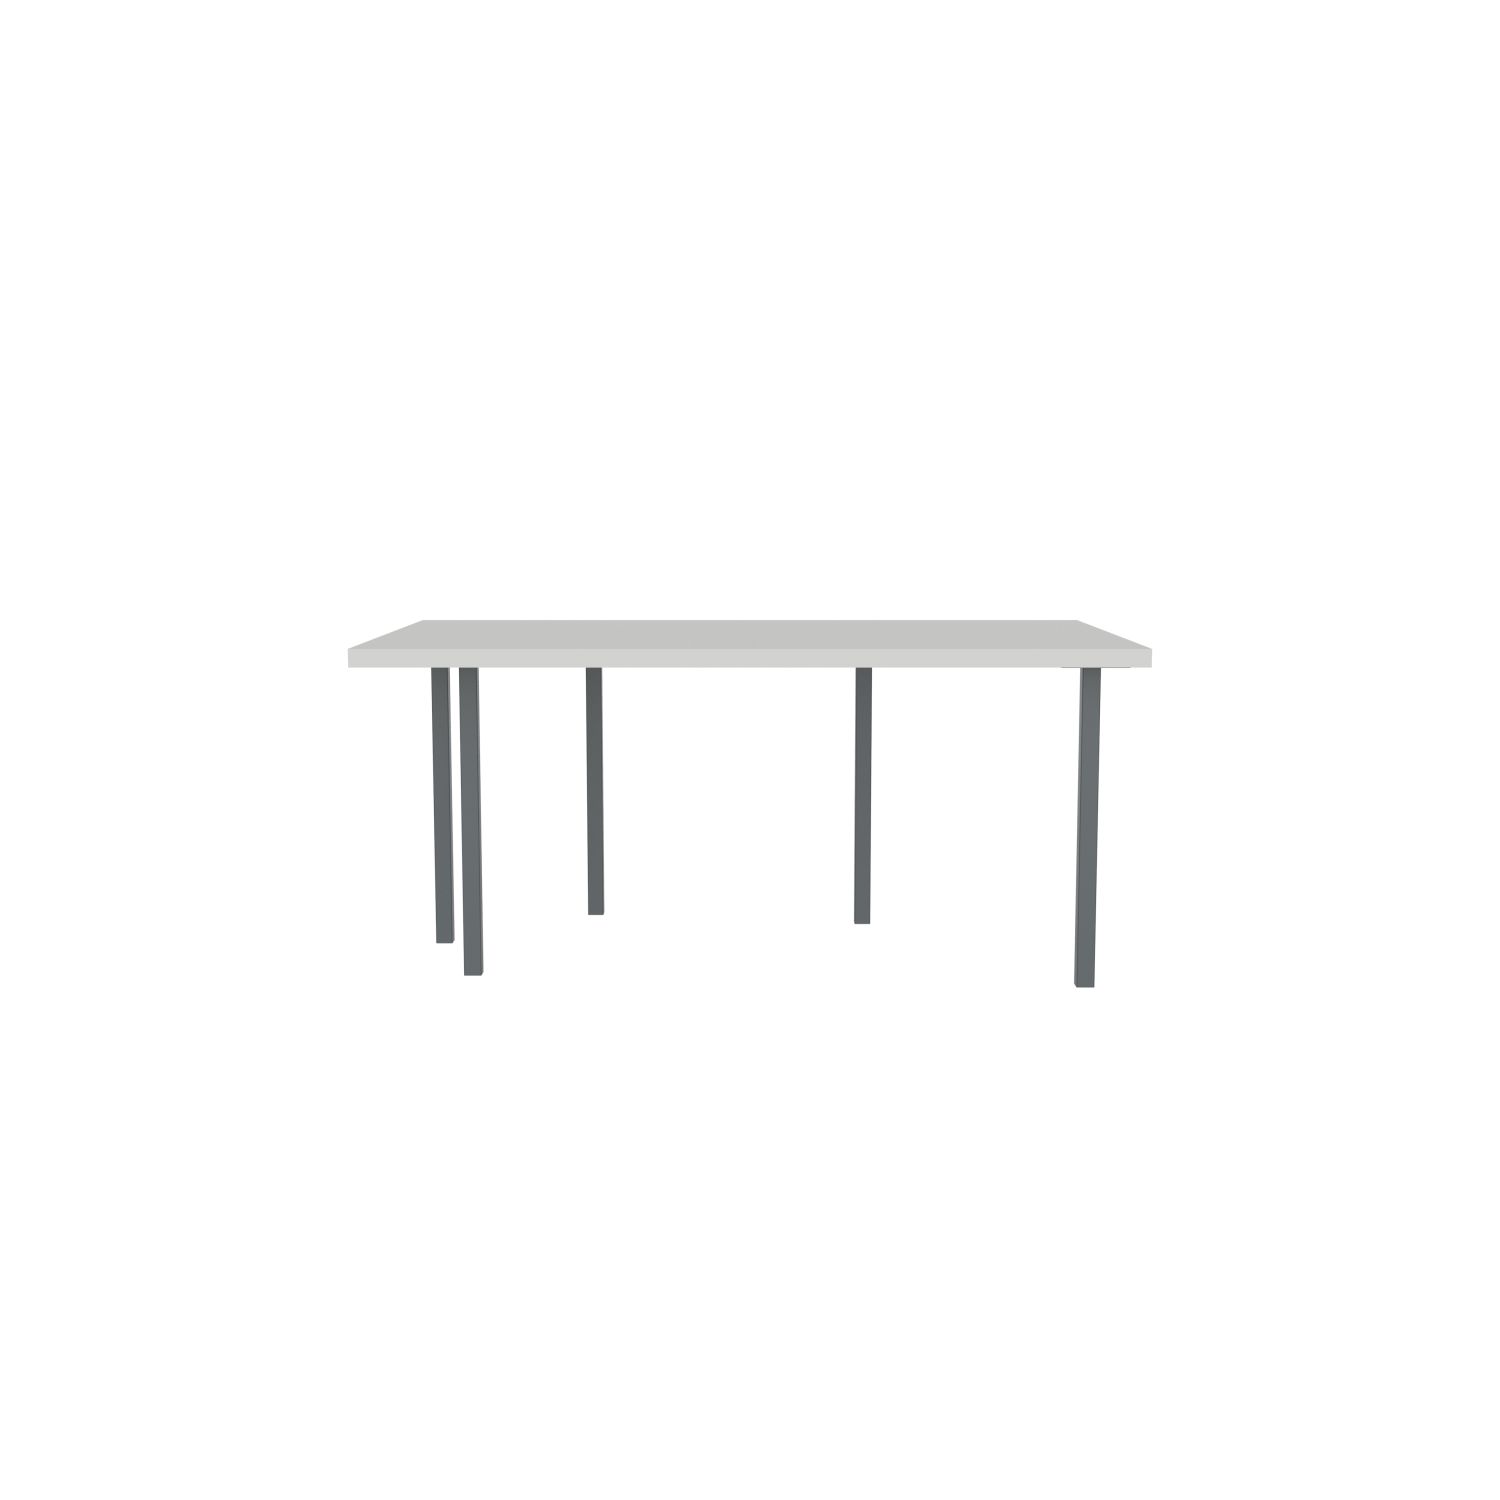 lensvelt bbrand table five fixed heigt 103x172 hpl boring grey 50 mm price level 1 dark grey ral7011